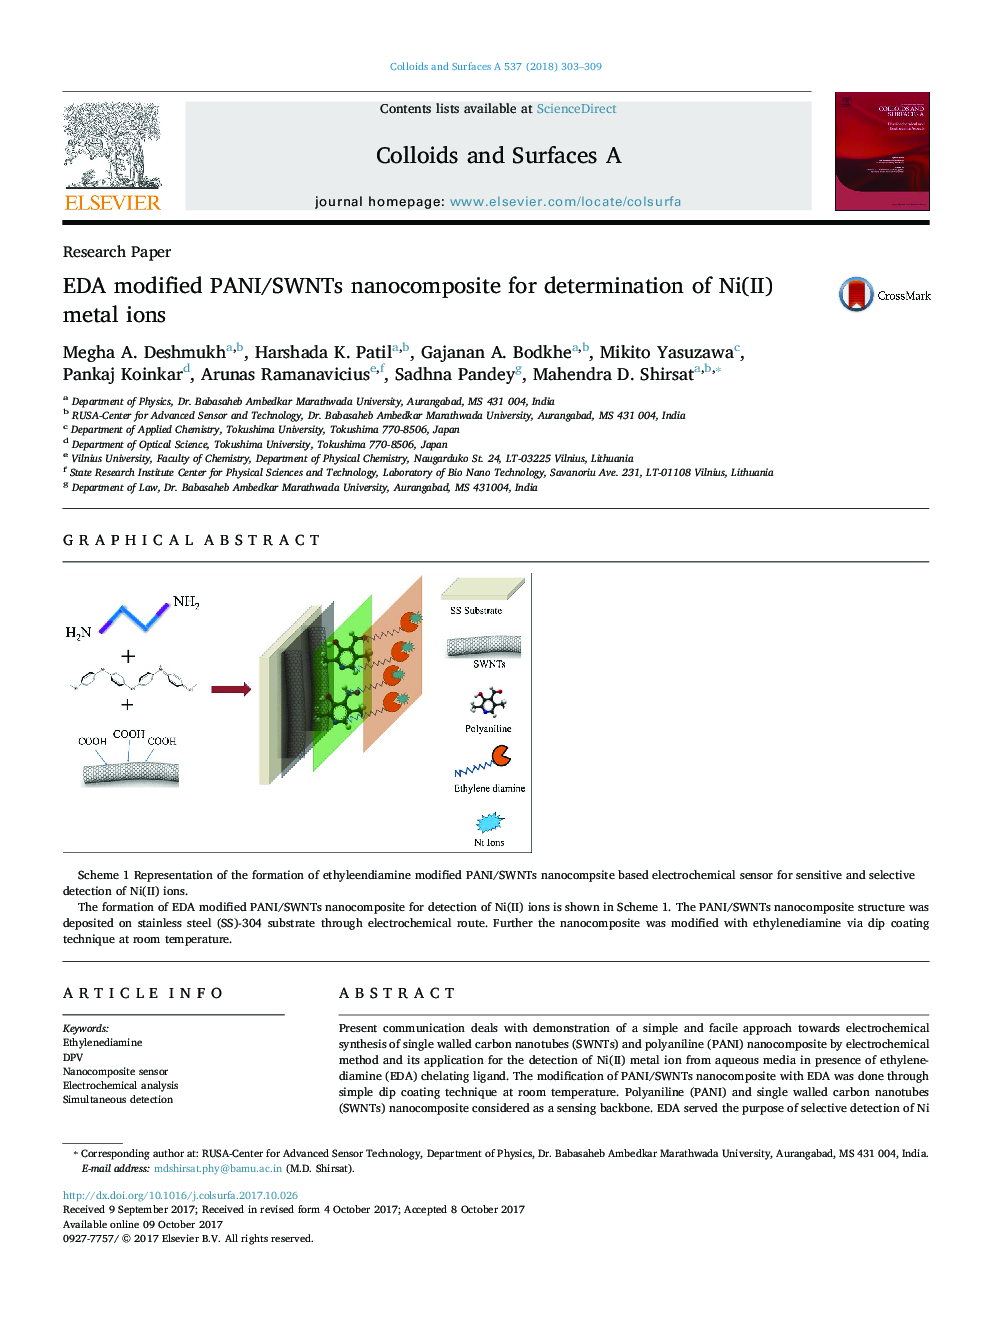 EDA modified PANI/SWNTs nanocomposite for determination of Ni(II) metal ions